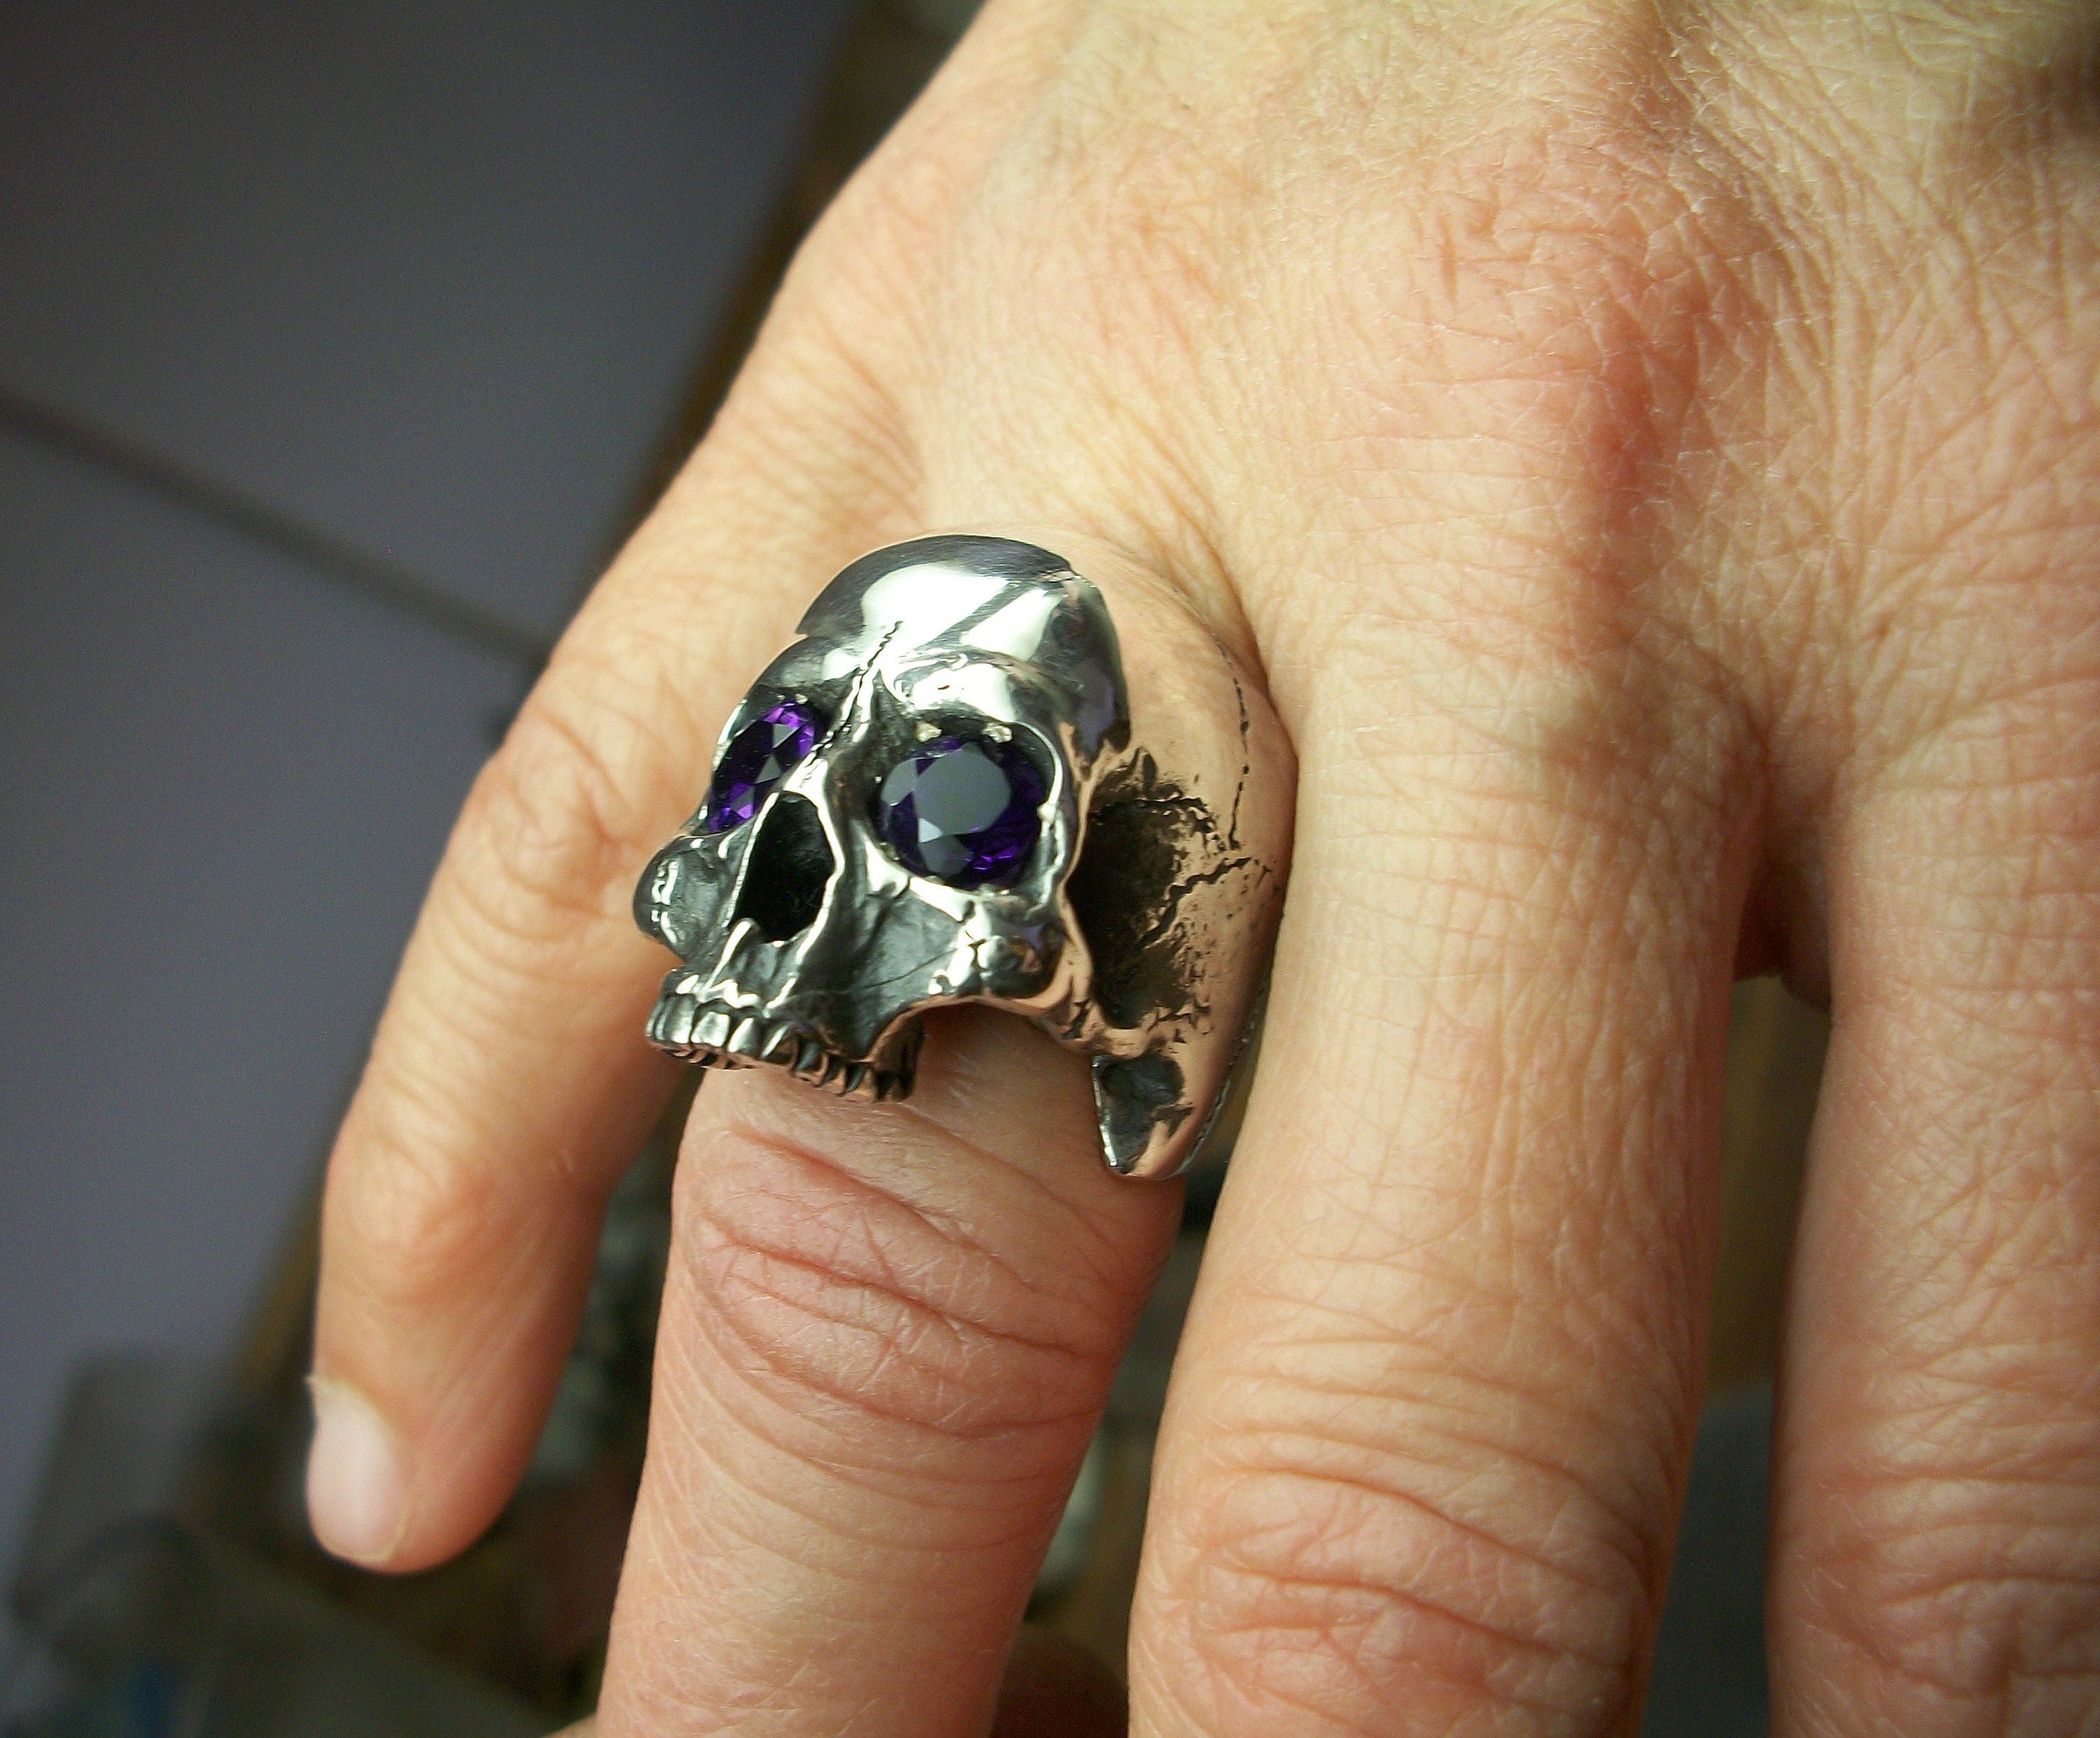 Skull ring - Sterling Silver Anatomical Keith Richards Skull Ring